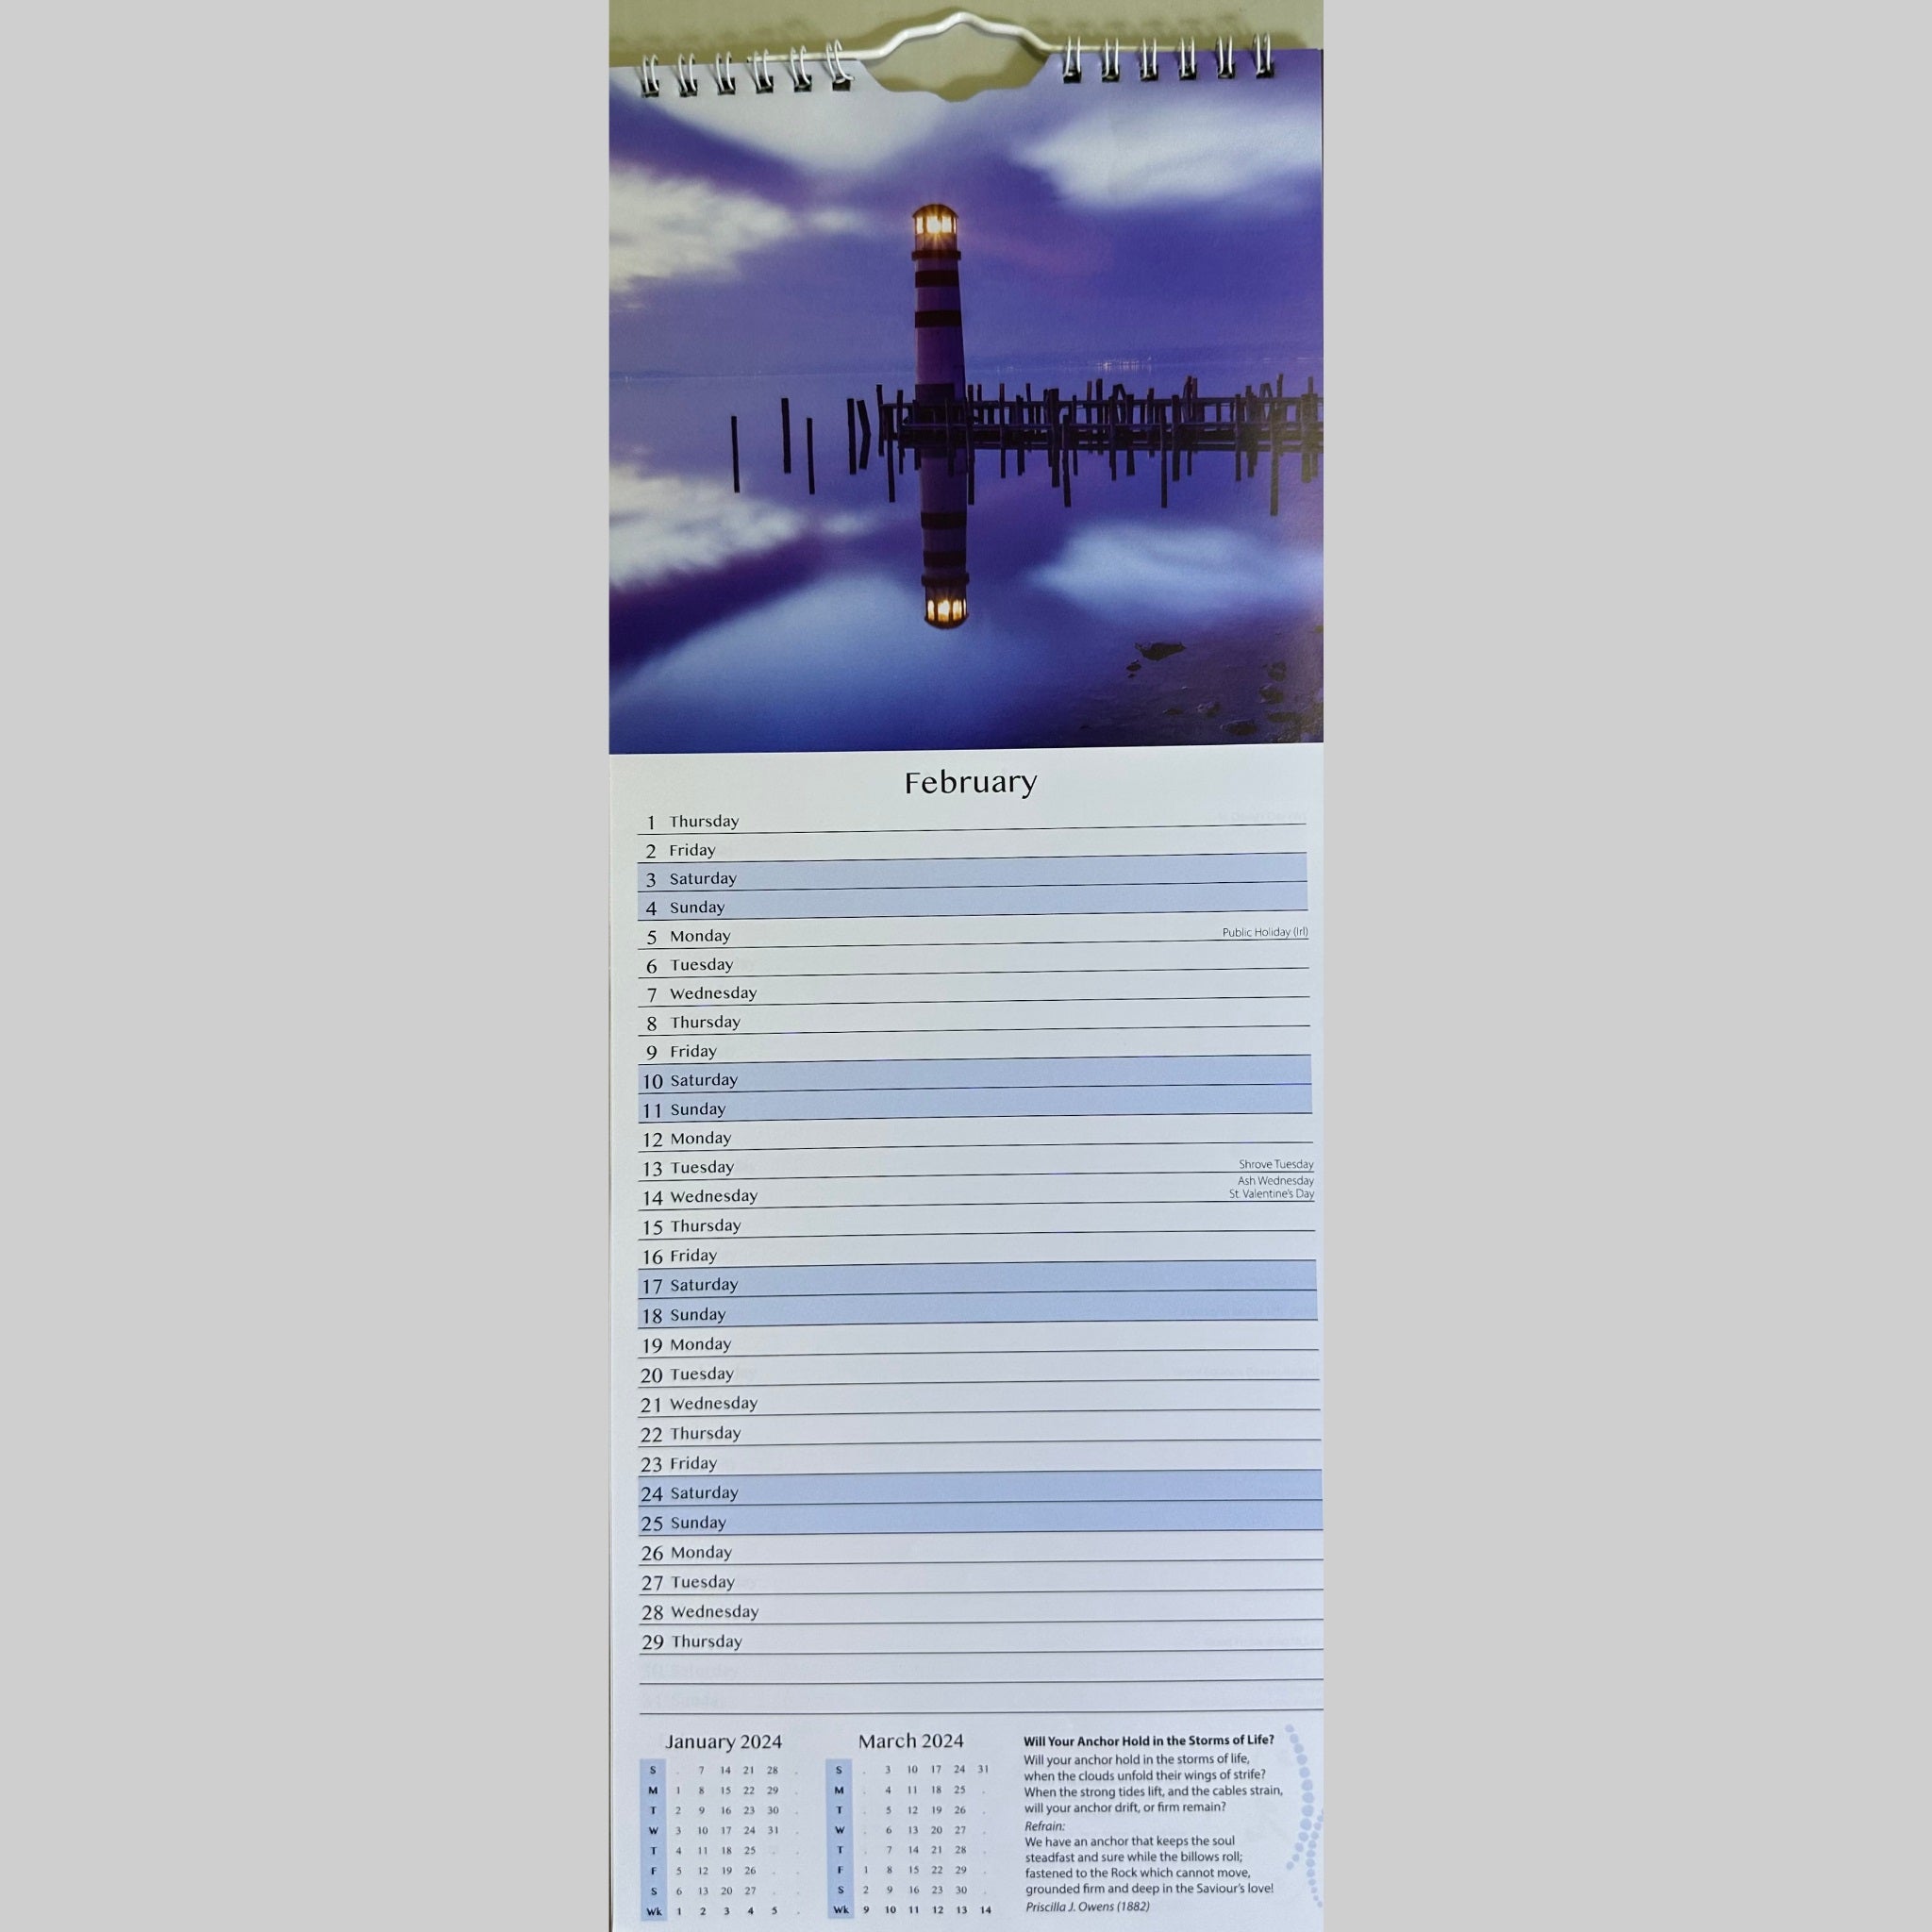 Beclen Harp Super Slim Month to View Spiral Bound Hanging Wall Calendar Home Office 2024 Psalms, Hymns